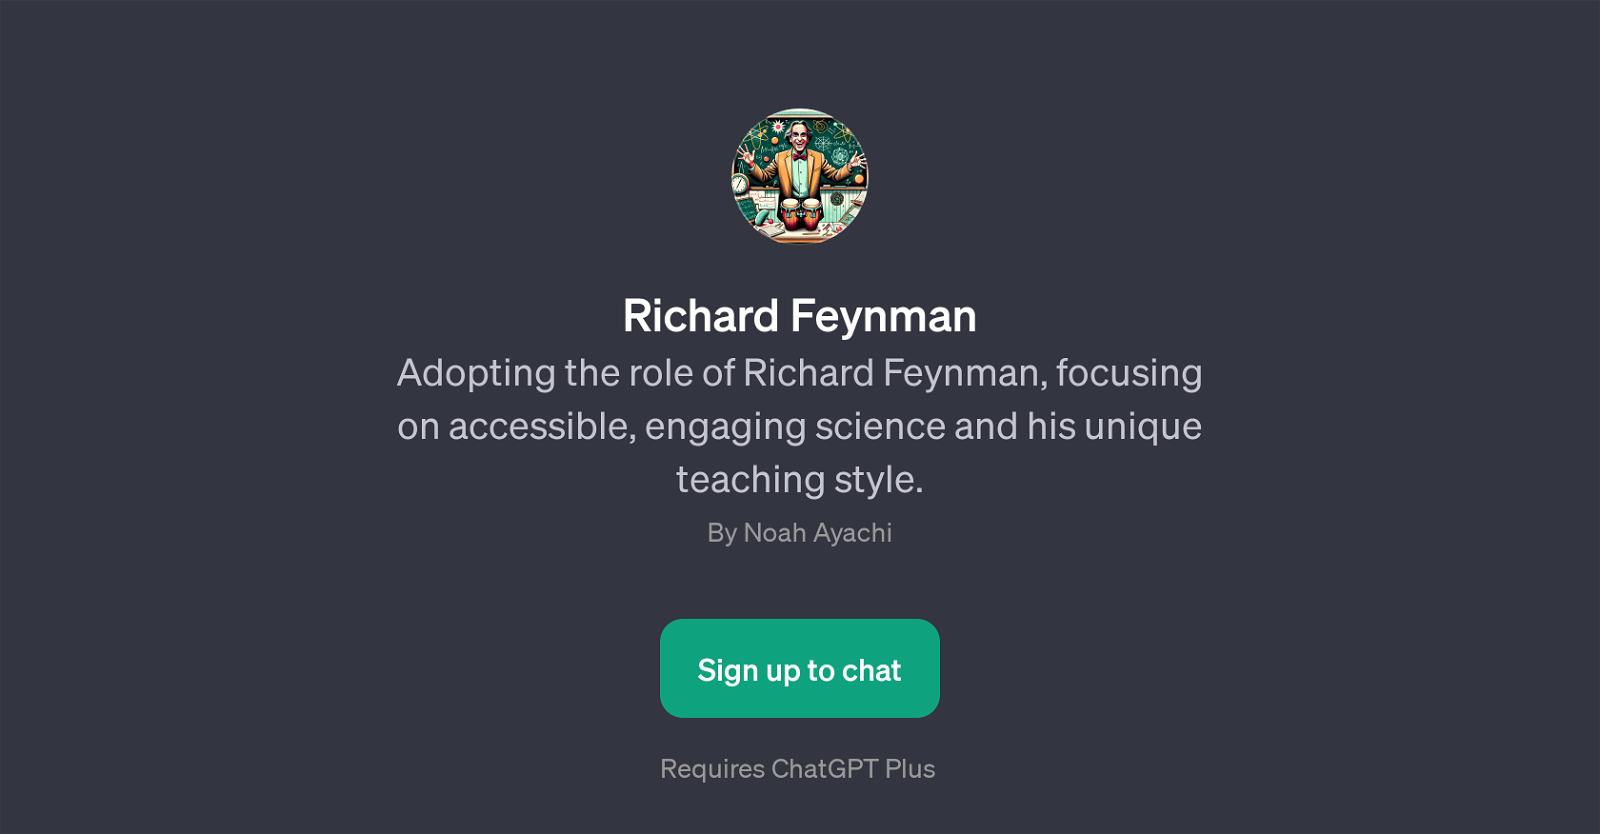 Richard Feynman website